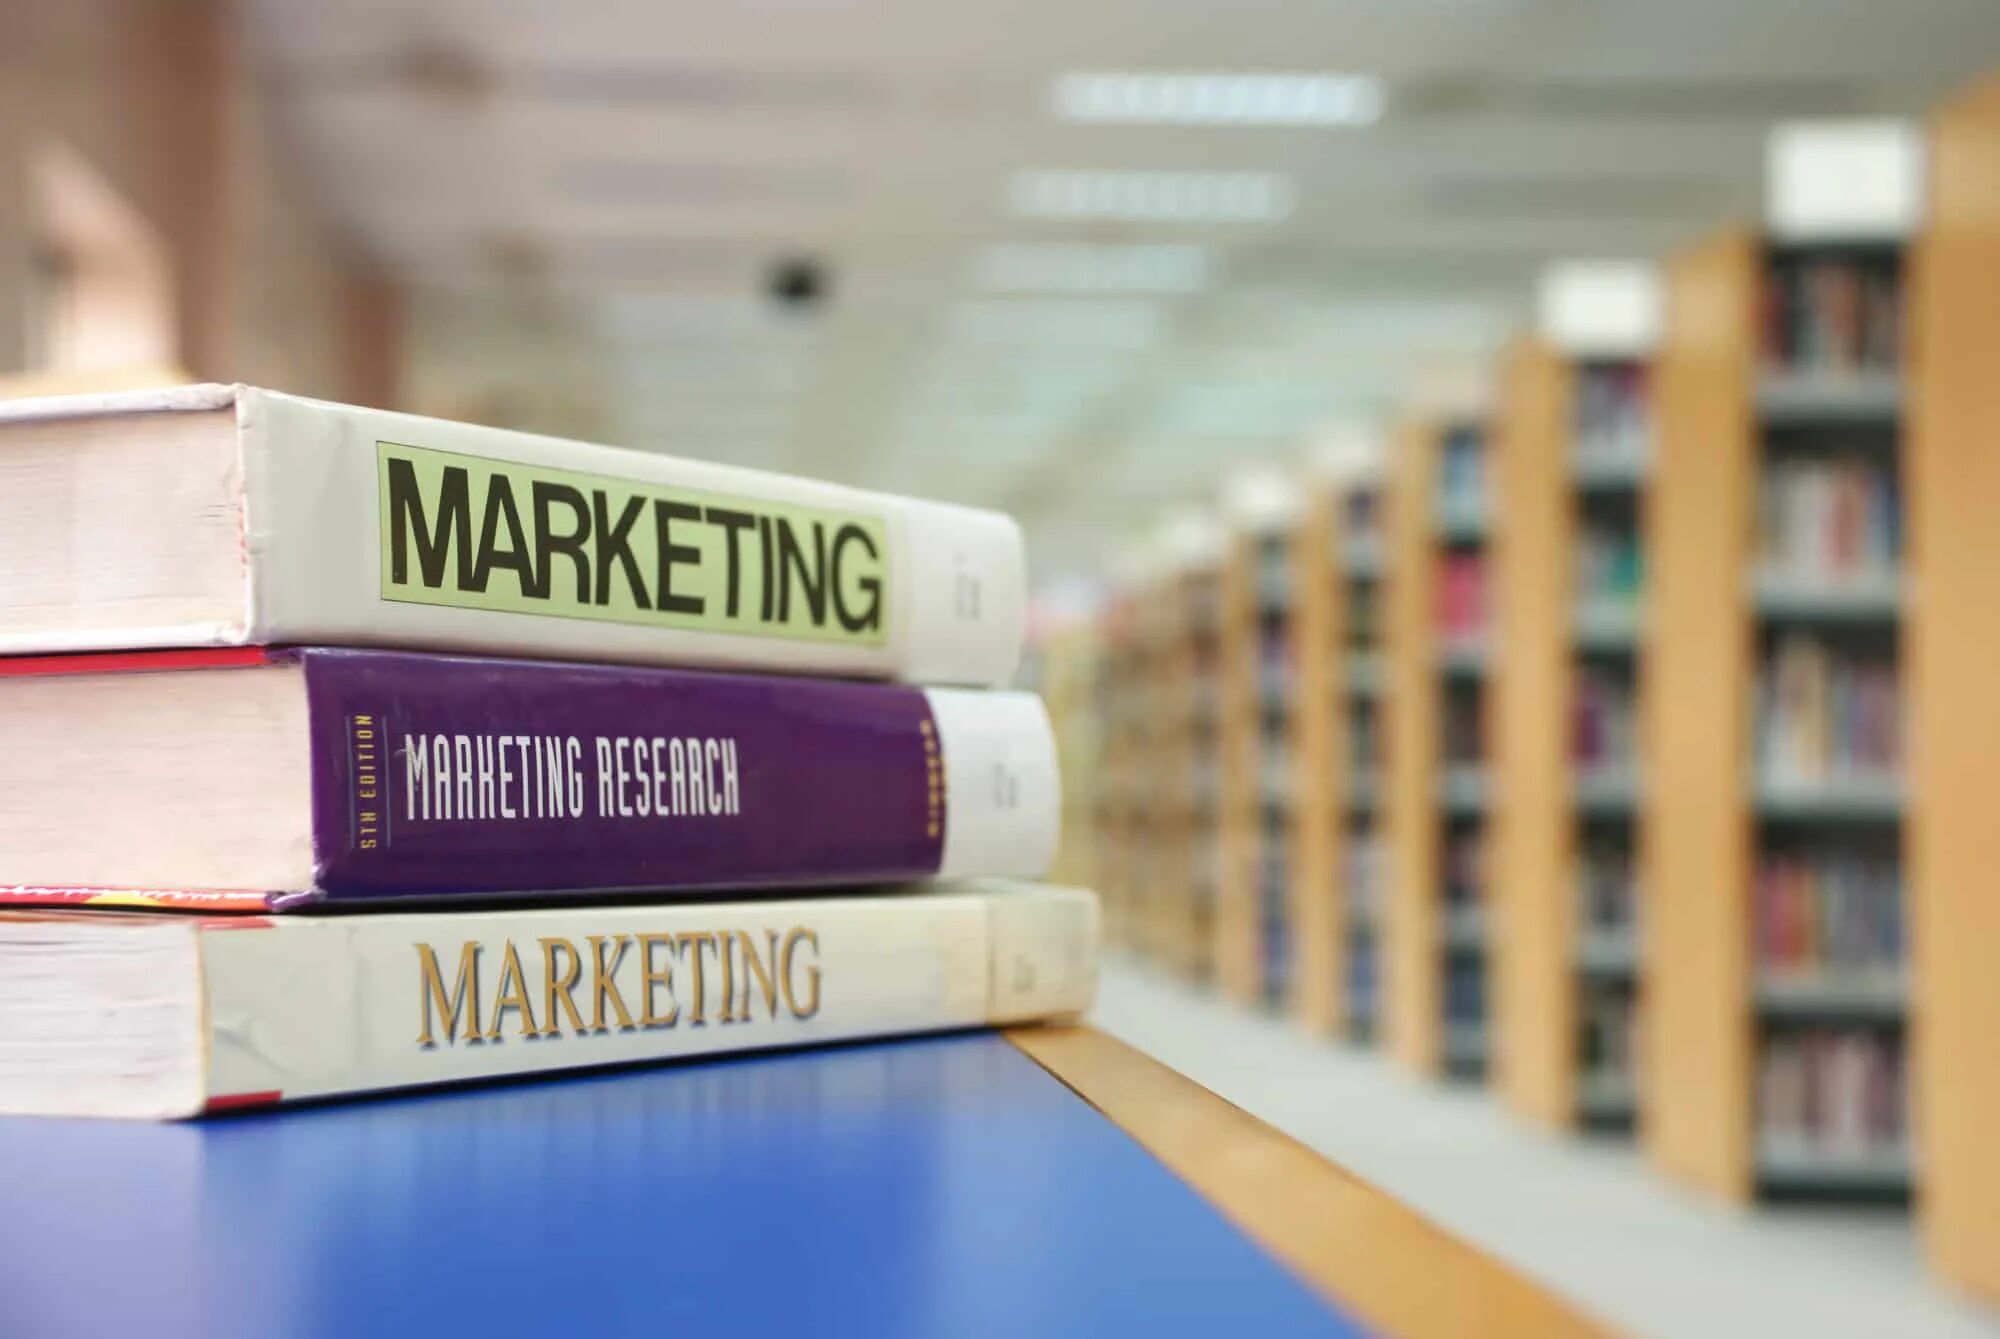 Here s book. Книги по маркетингу. Маркетинг в библиотеке. Библиотечный маркетинг. Стопка книг по маркетингу.